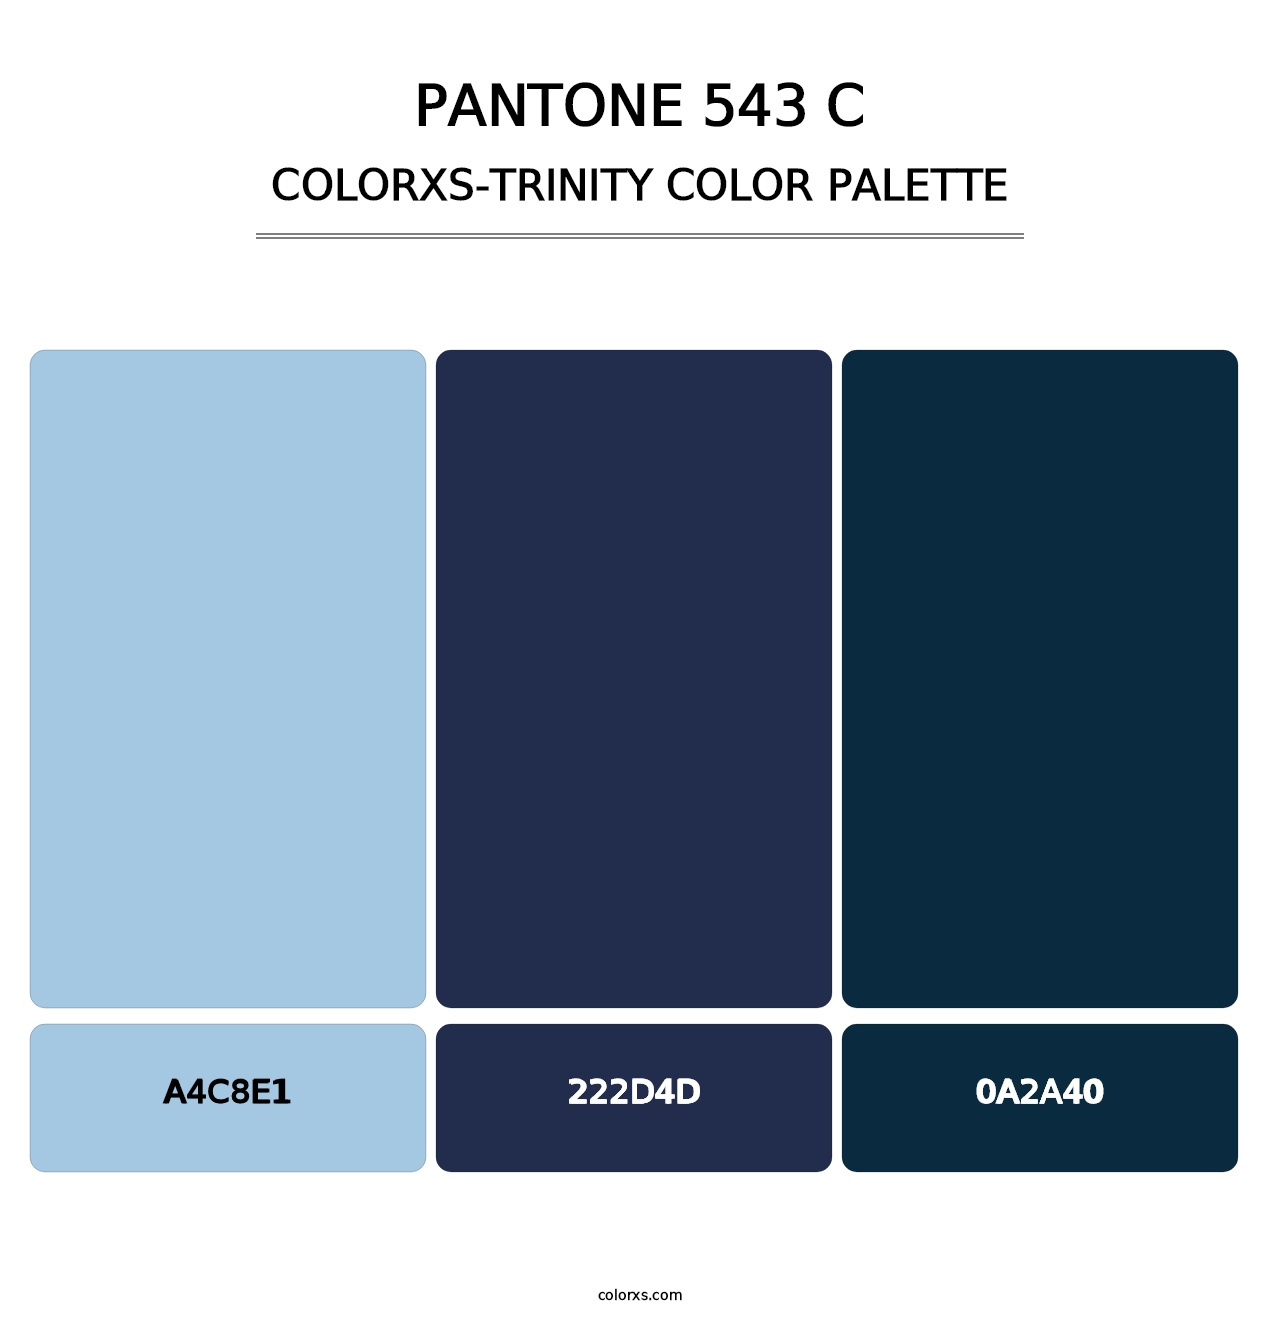 PANTONE 543 C - Colorxs Trinity Palette